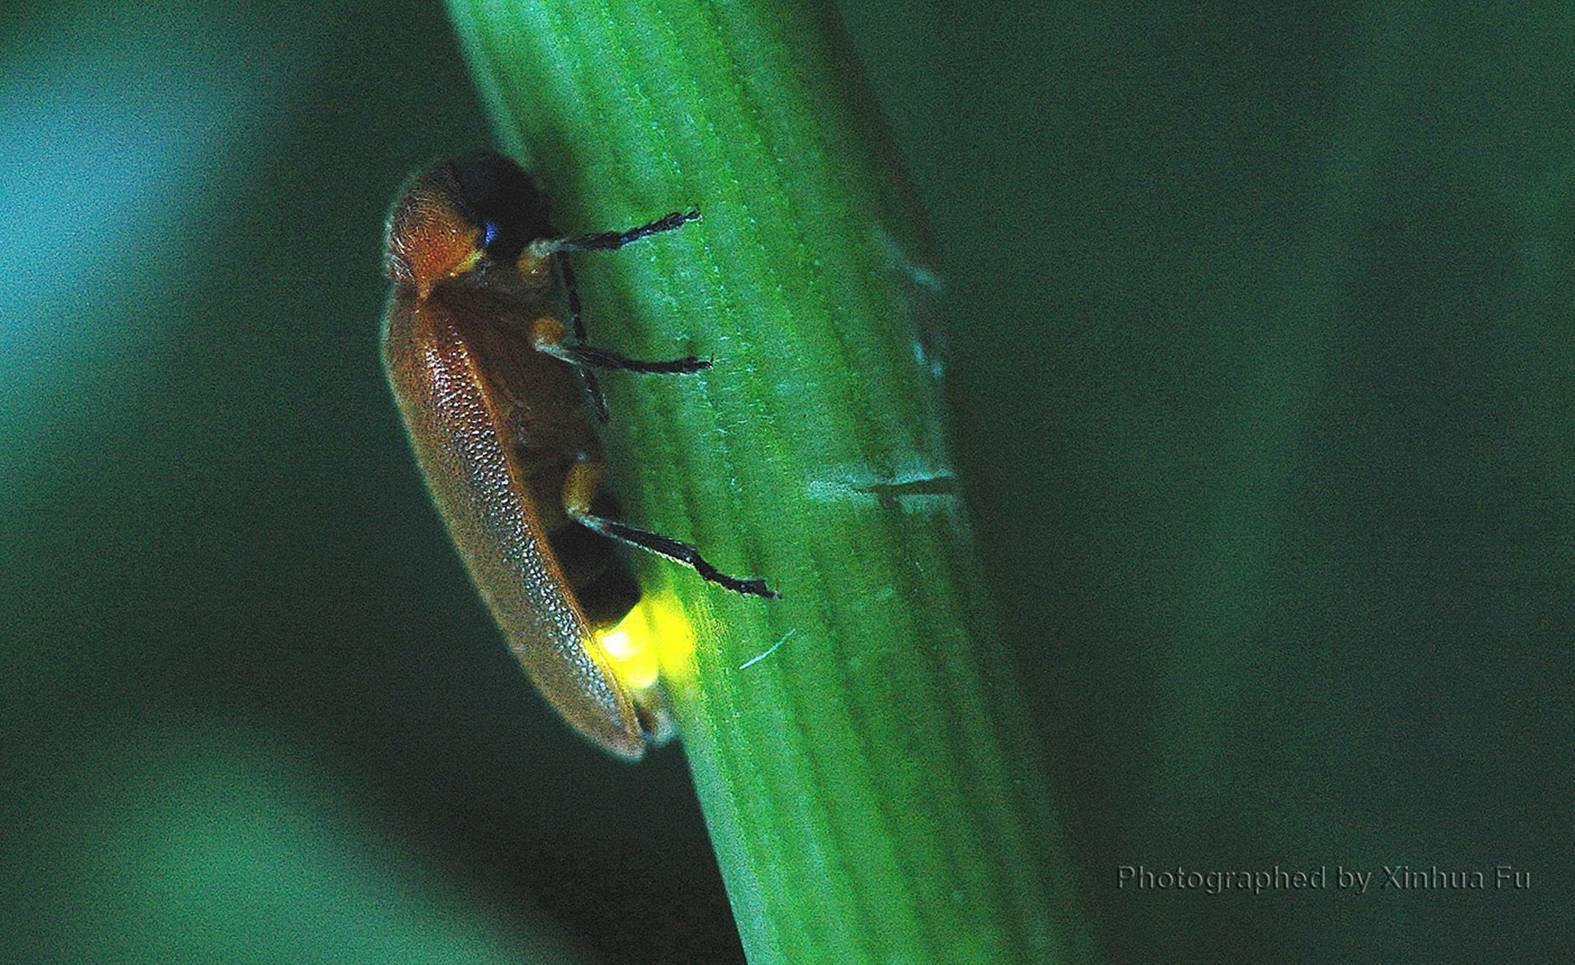 Firefly larvae : pics